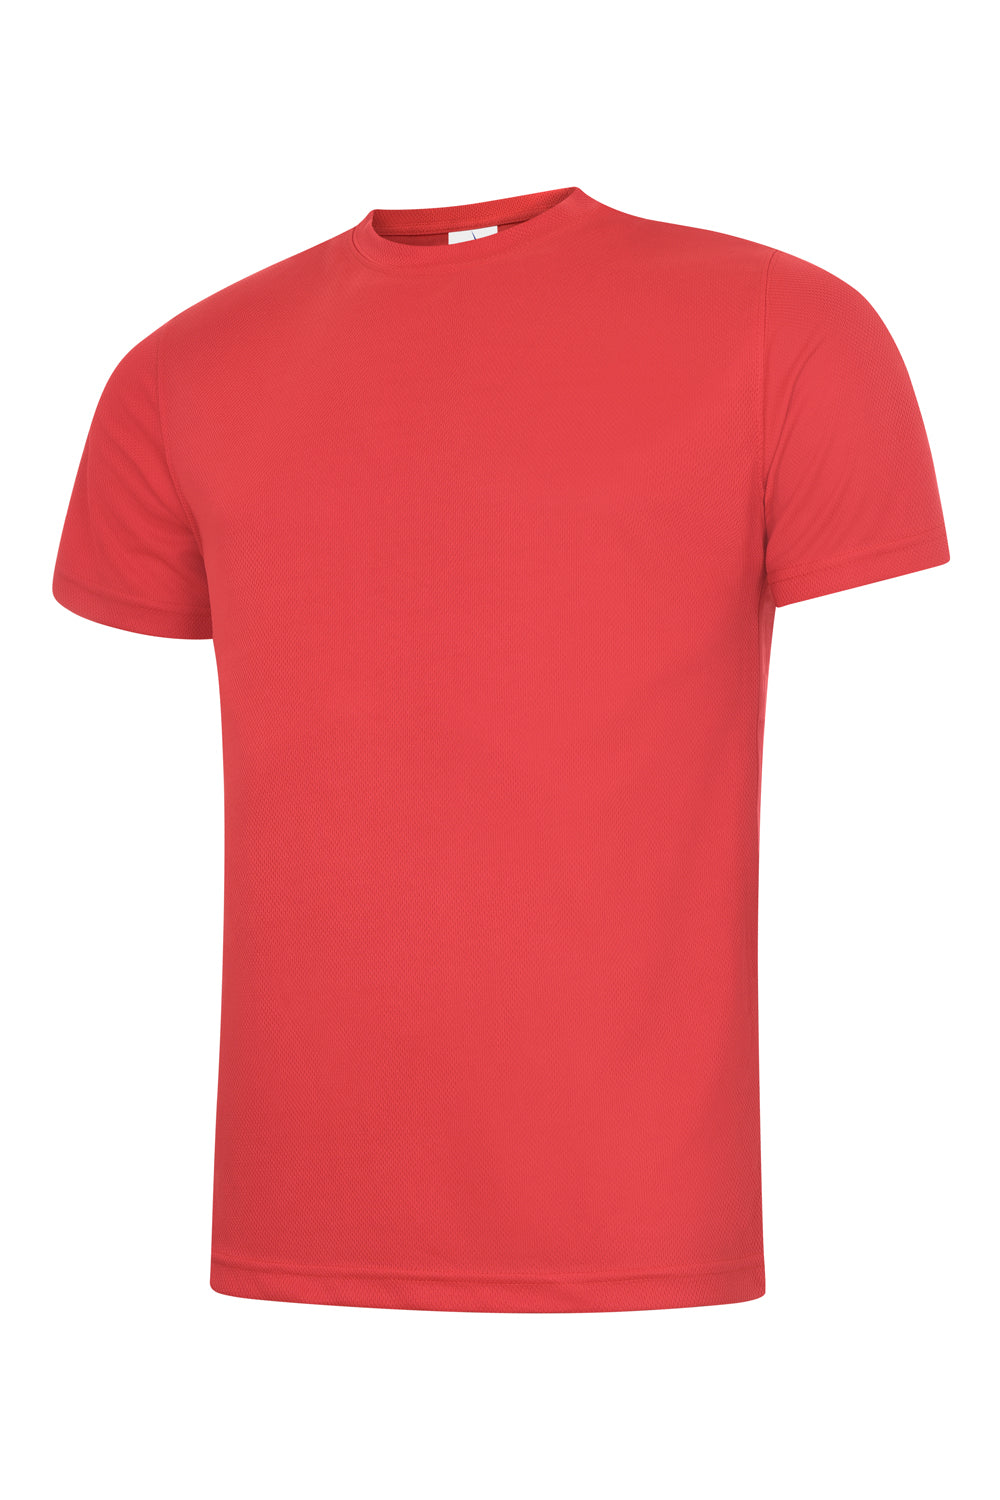 Uneek Mens Ultra Cool T Shirt UC315 - Red